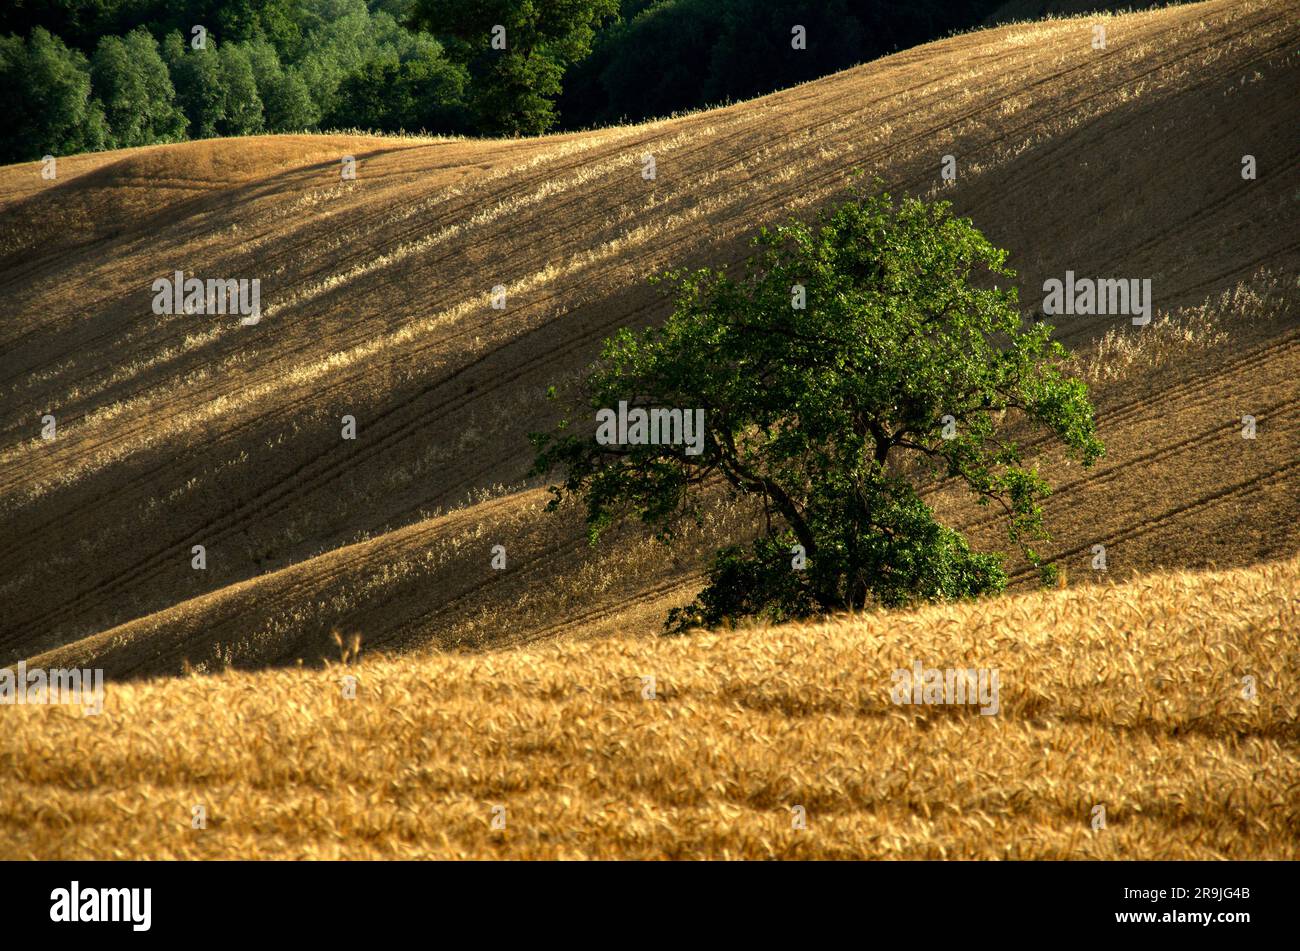 una quercia solitaria en mezzo ad un campo di grano maturo Banque D'Images